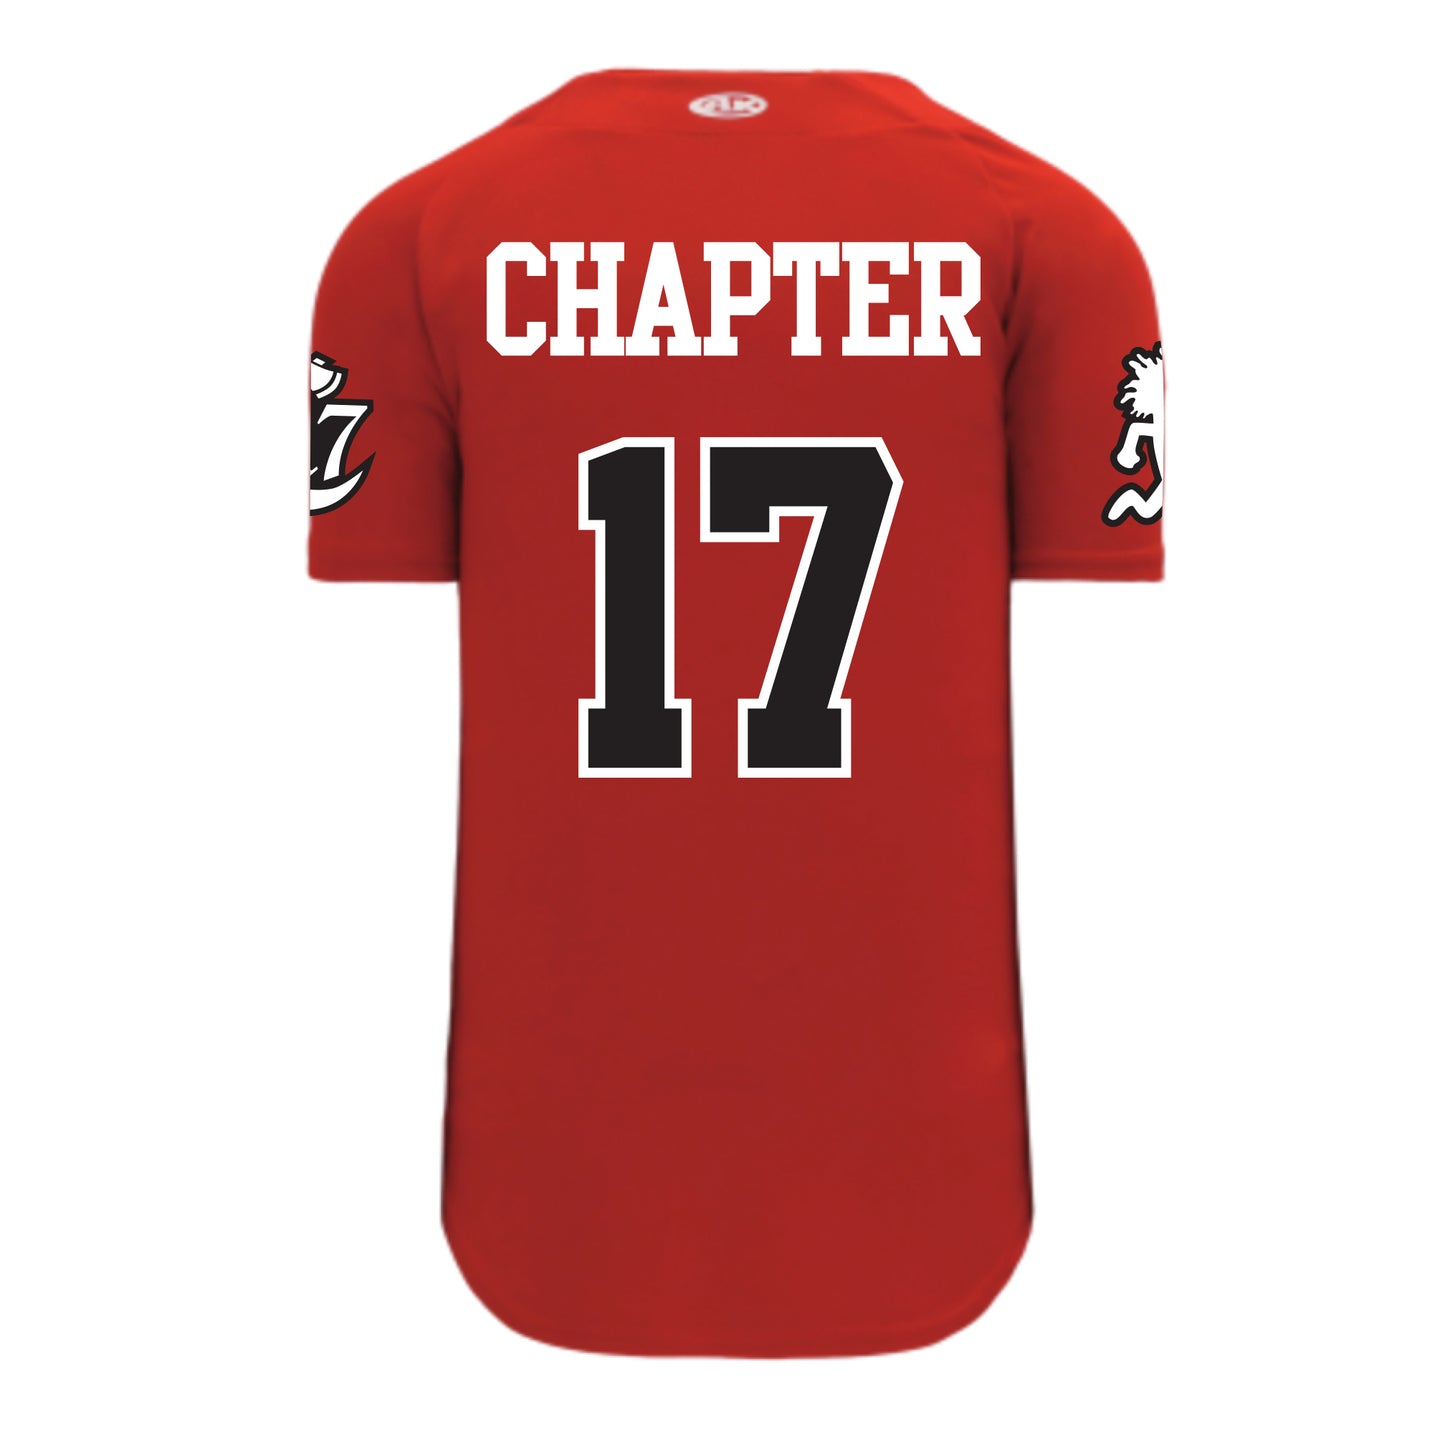 Chapter 17 Baseball button up jersey